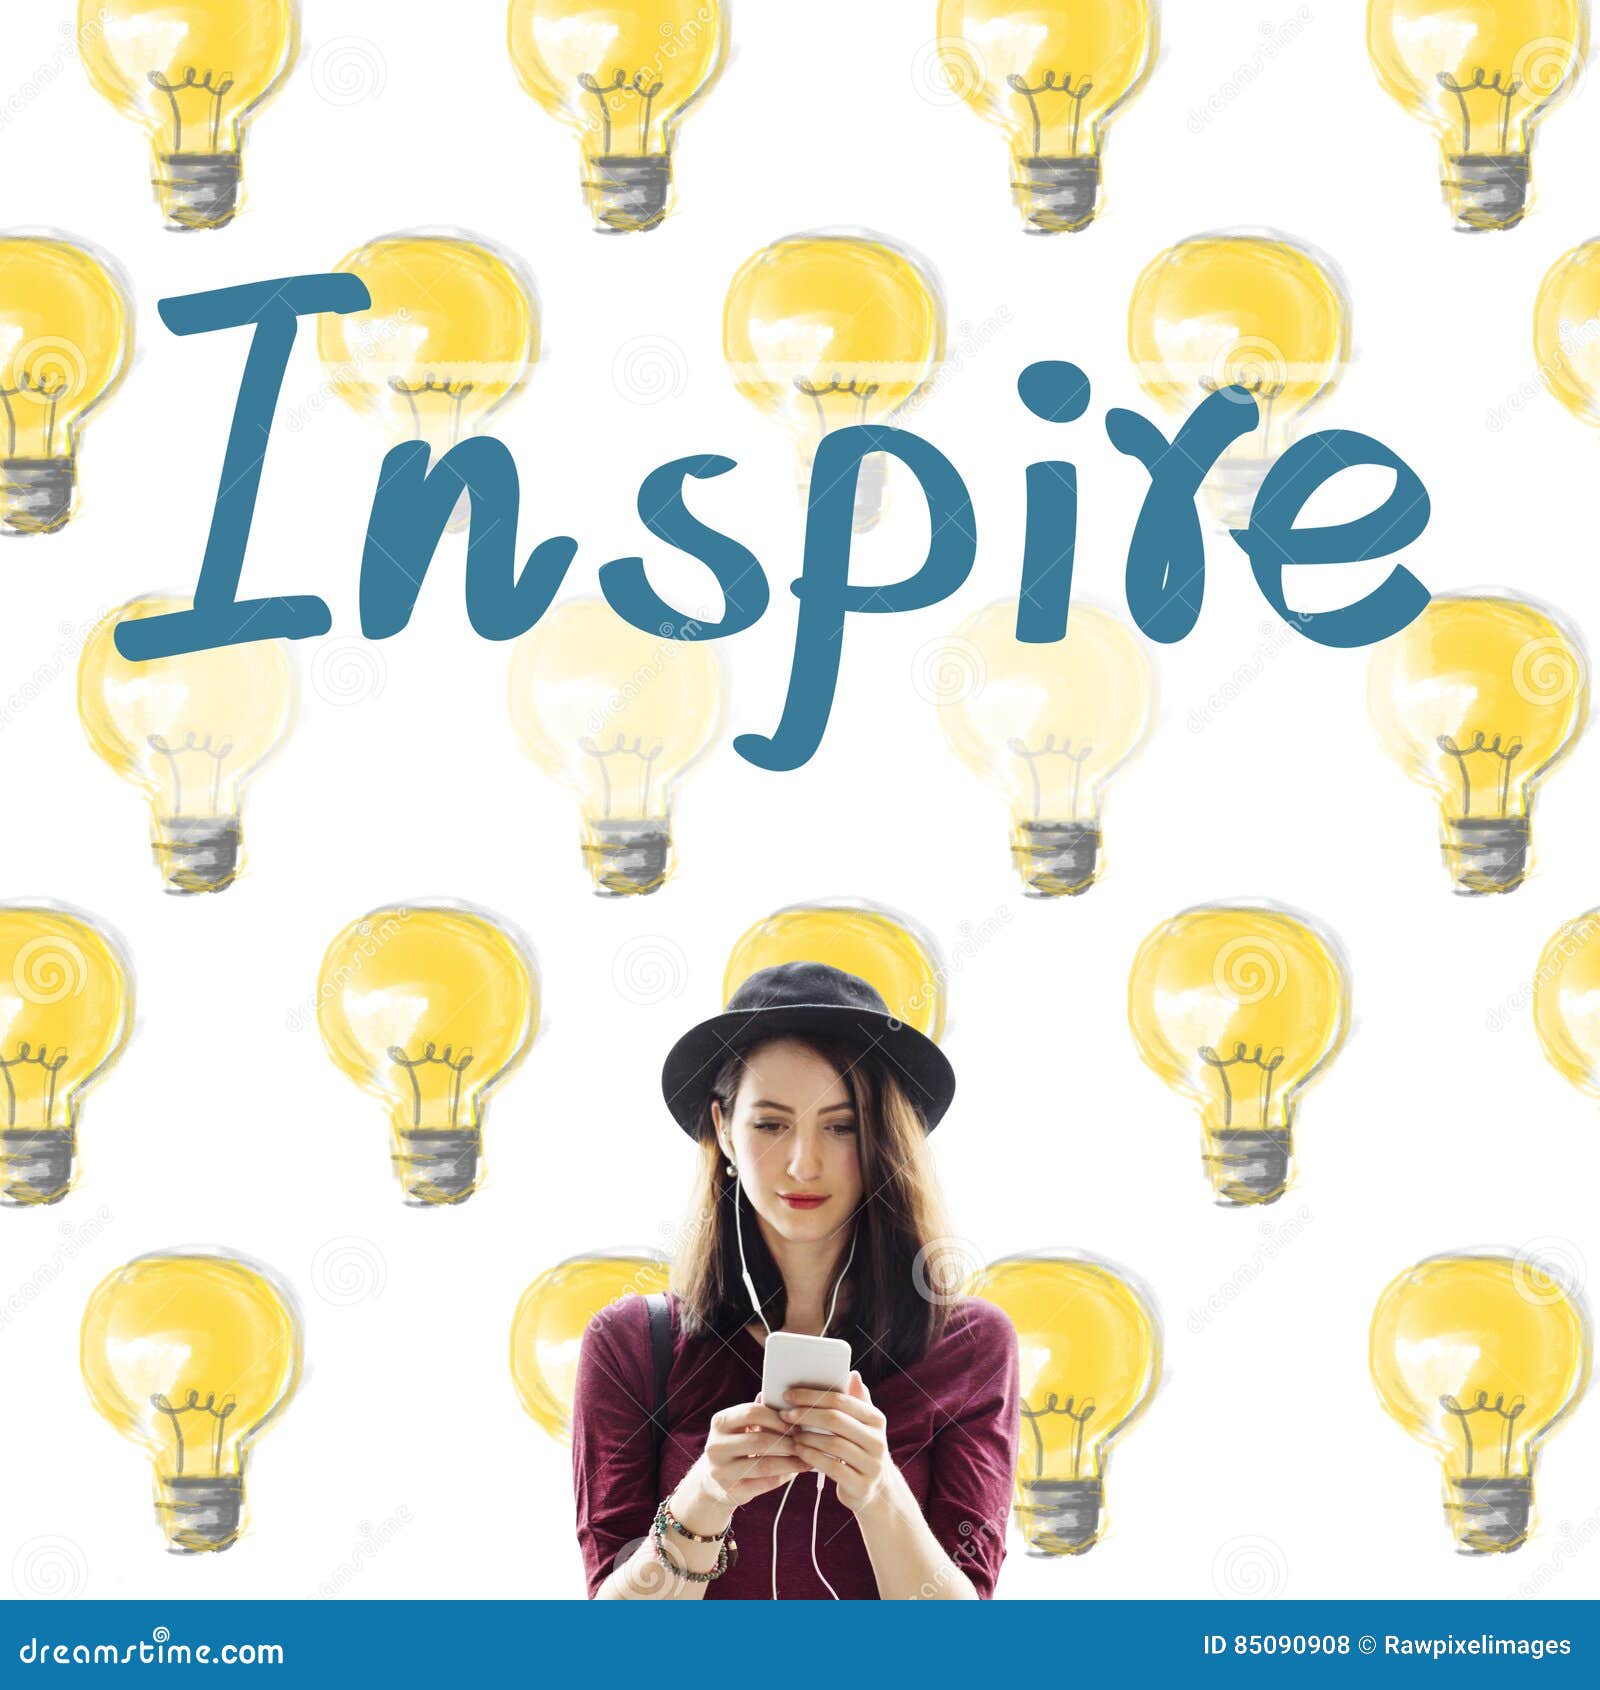 Inspire Aspirations Goal Imagination Innovation Concept Stock Photo ...
